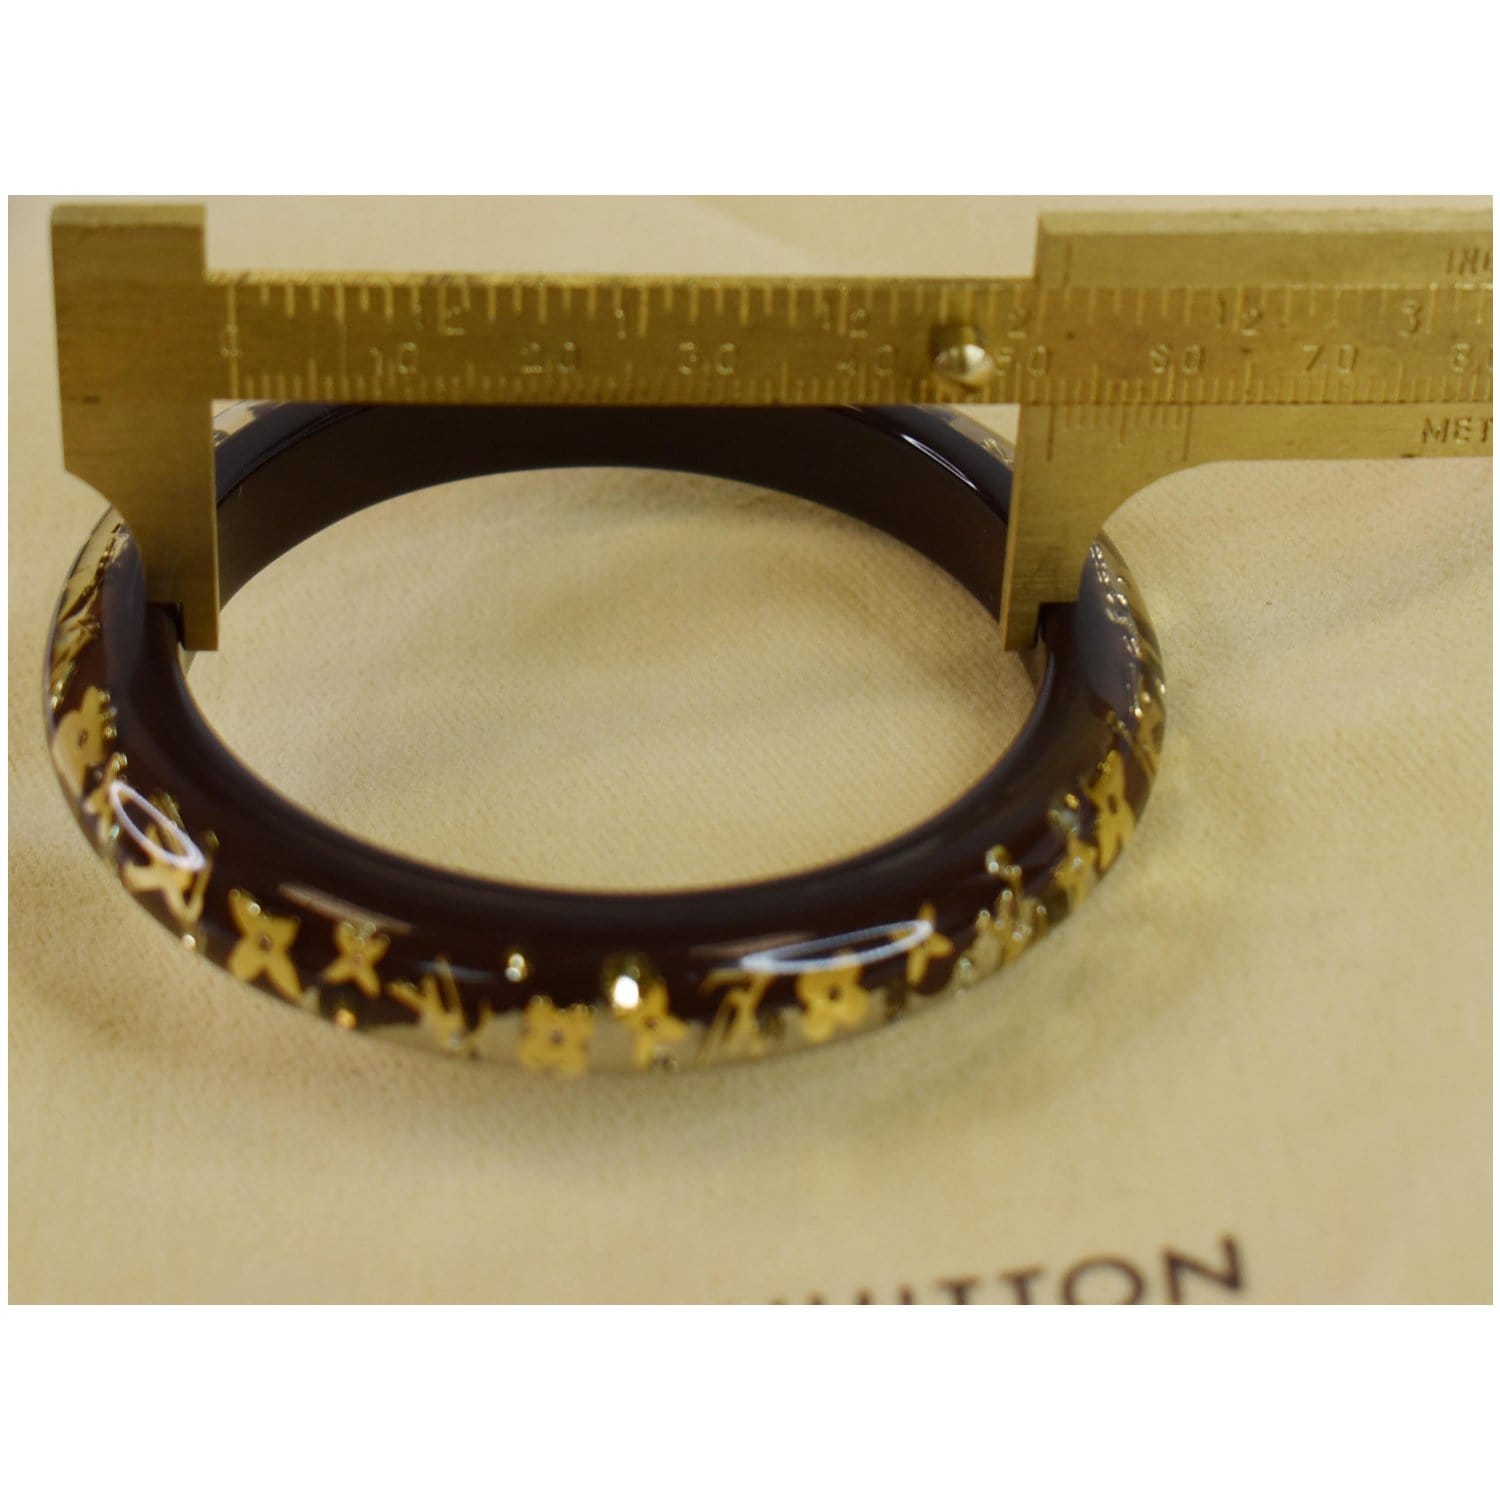 Louis Vuitton Wide Inclusion Bangle Bracelet - Brown, Brass Bangle